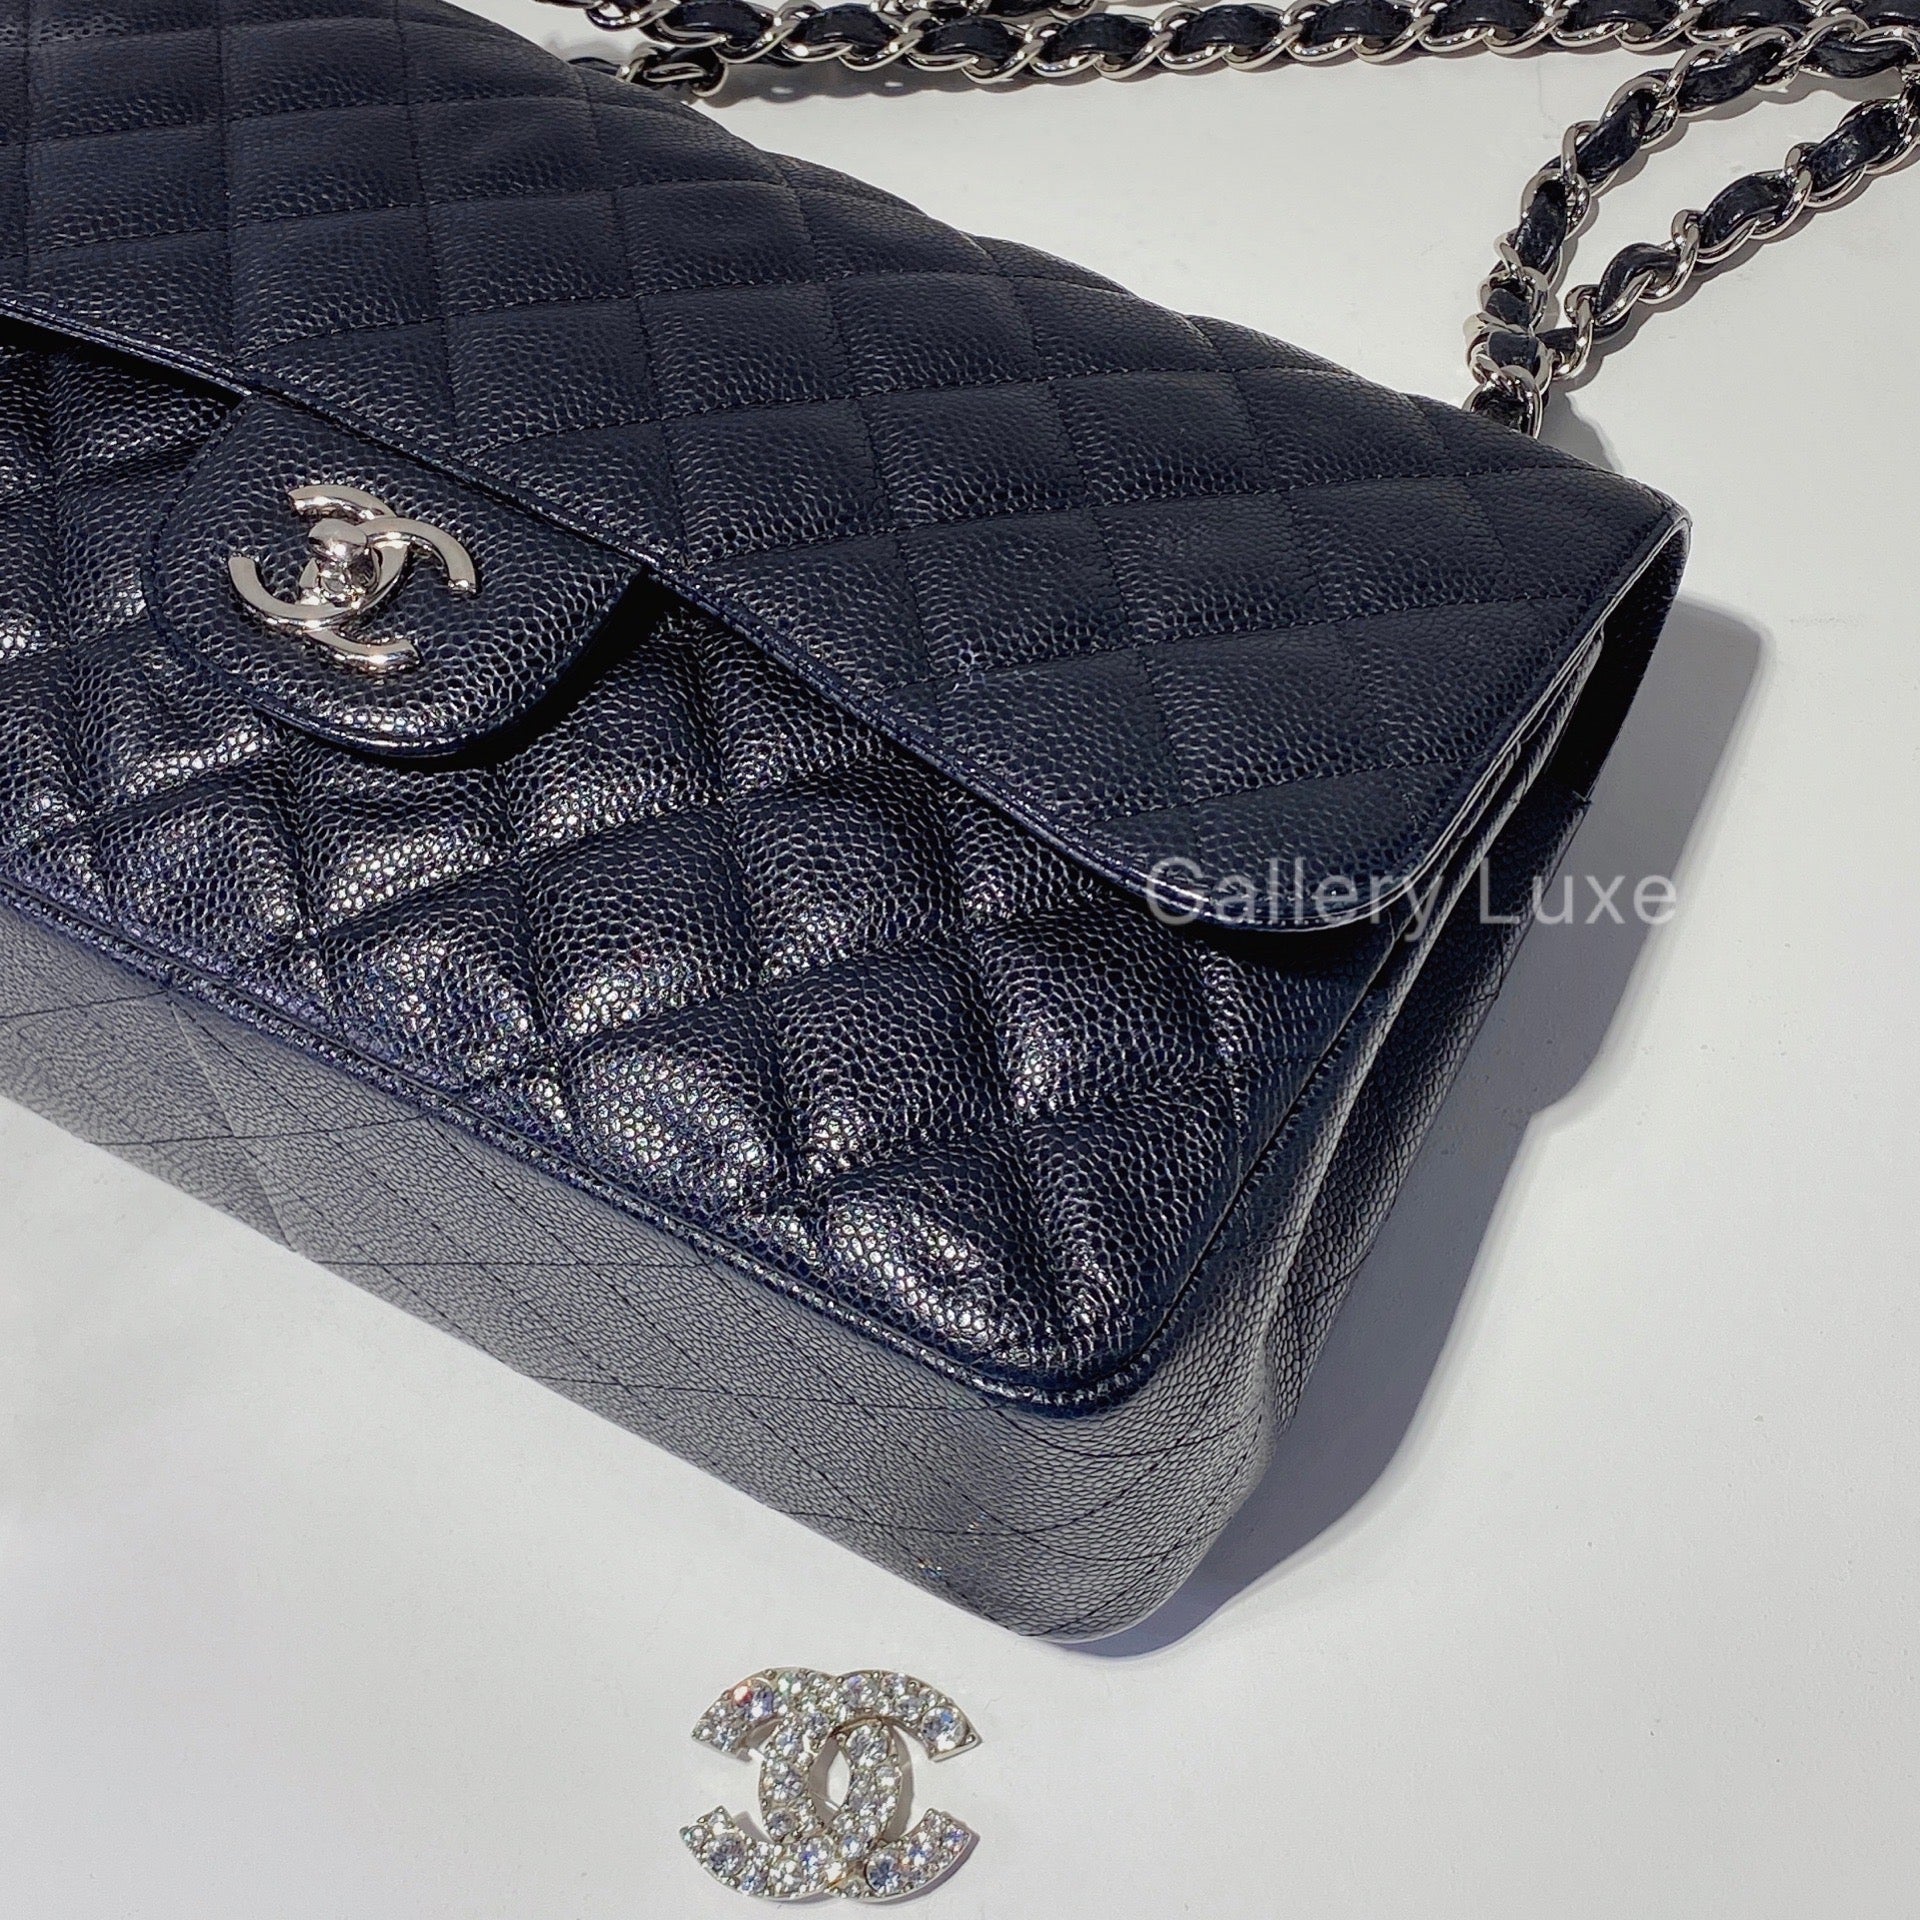 Studio Blog: Style inspo, The Chanel Brooch